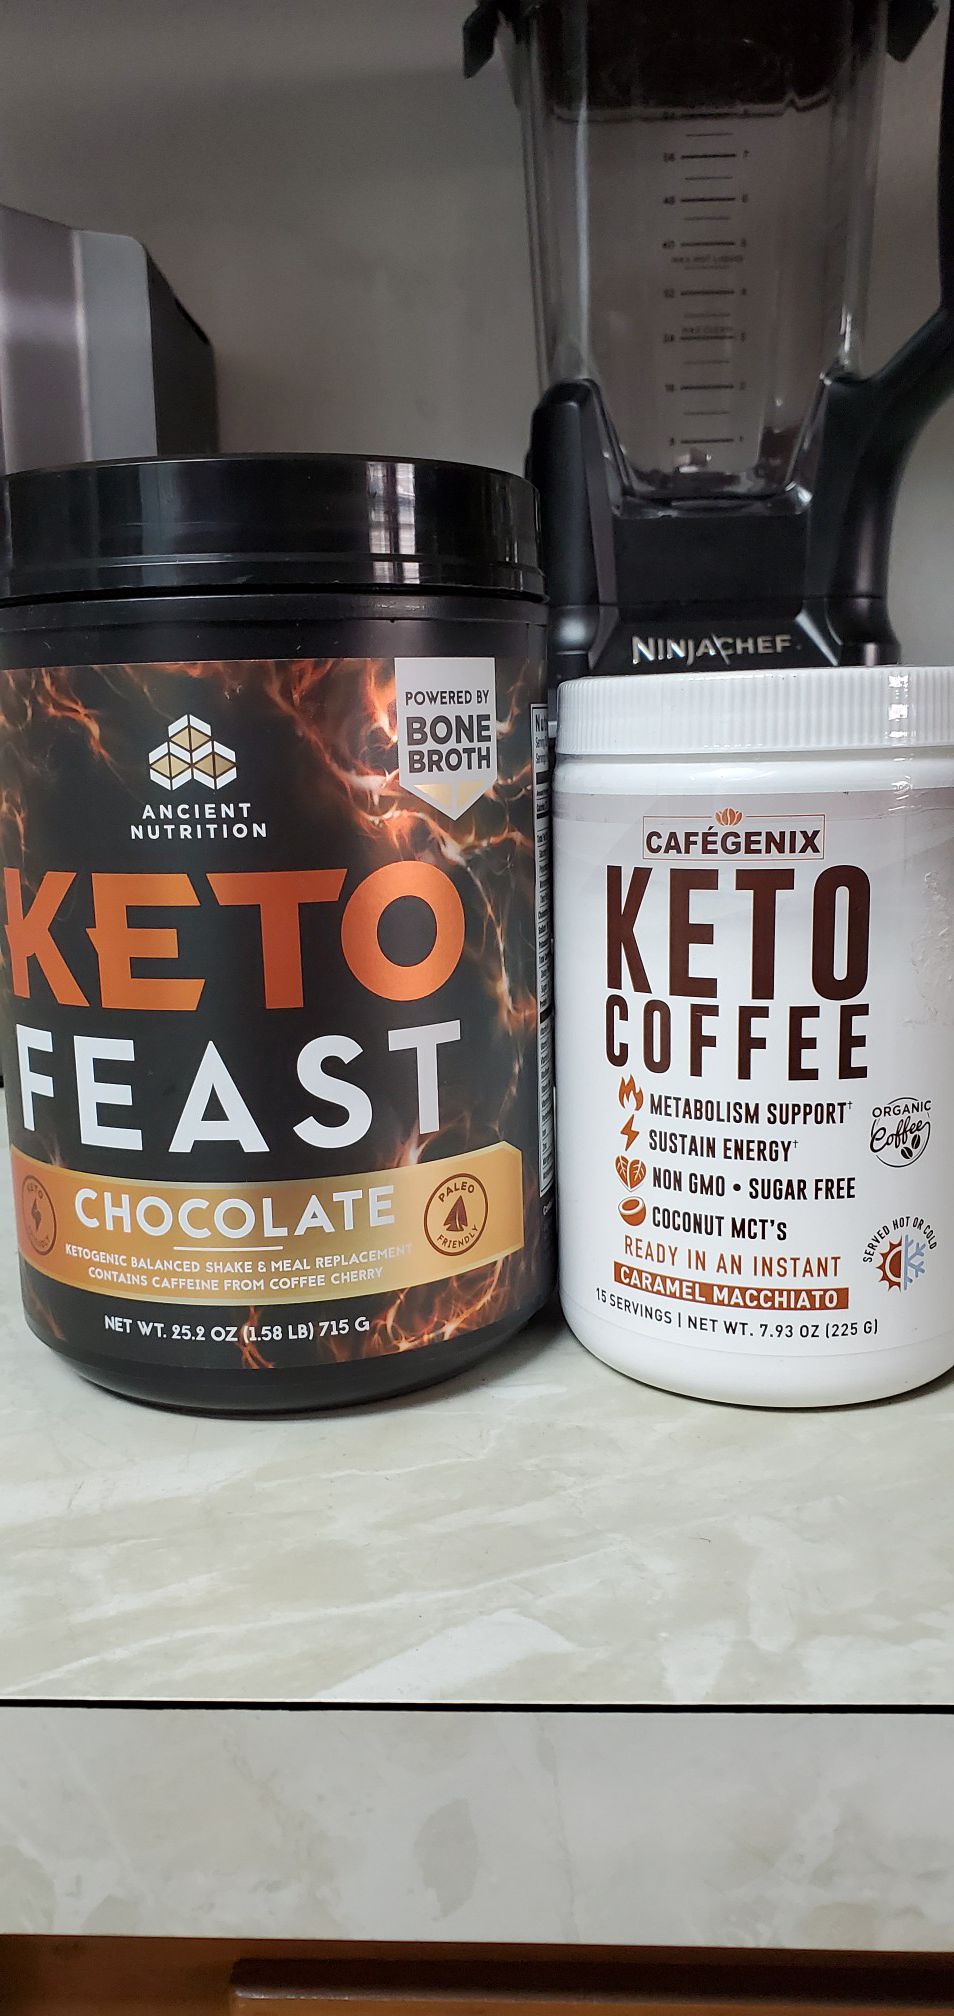 Keto Feast and Coffee